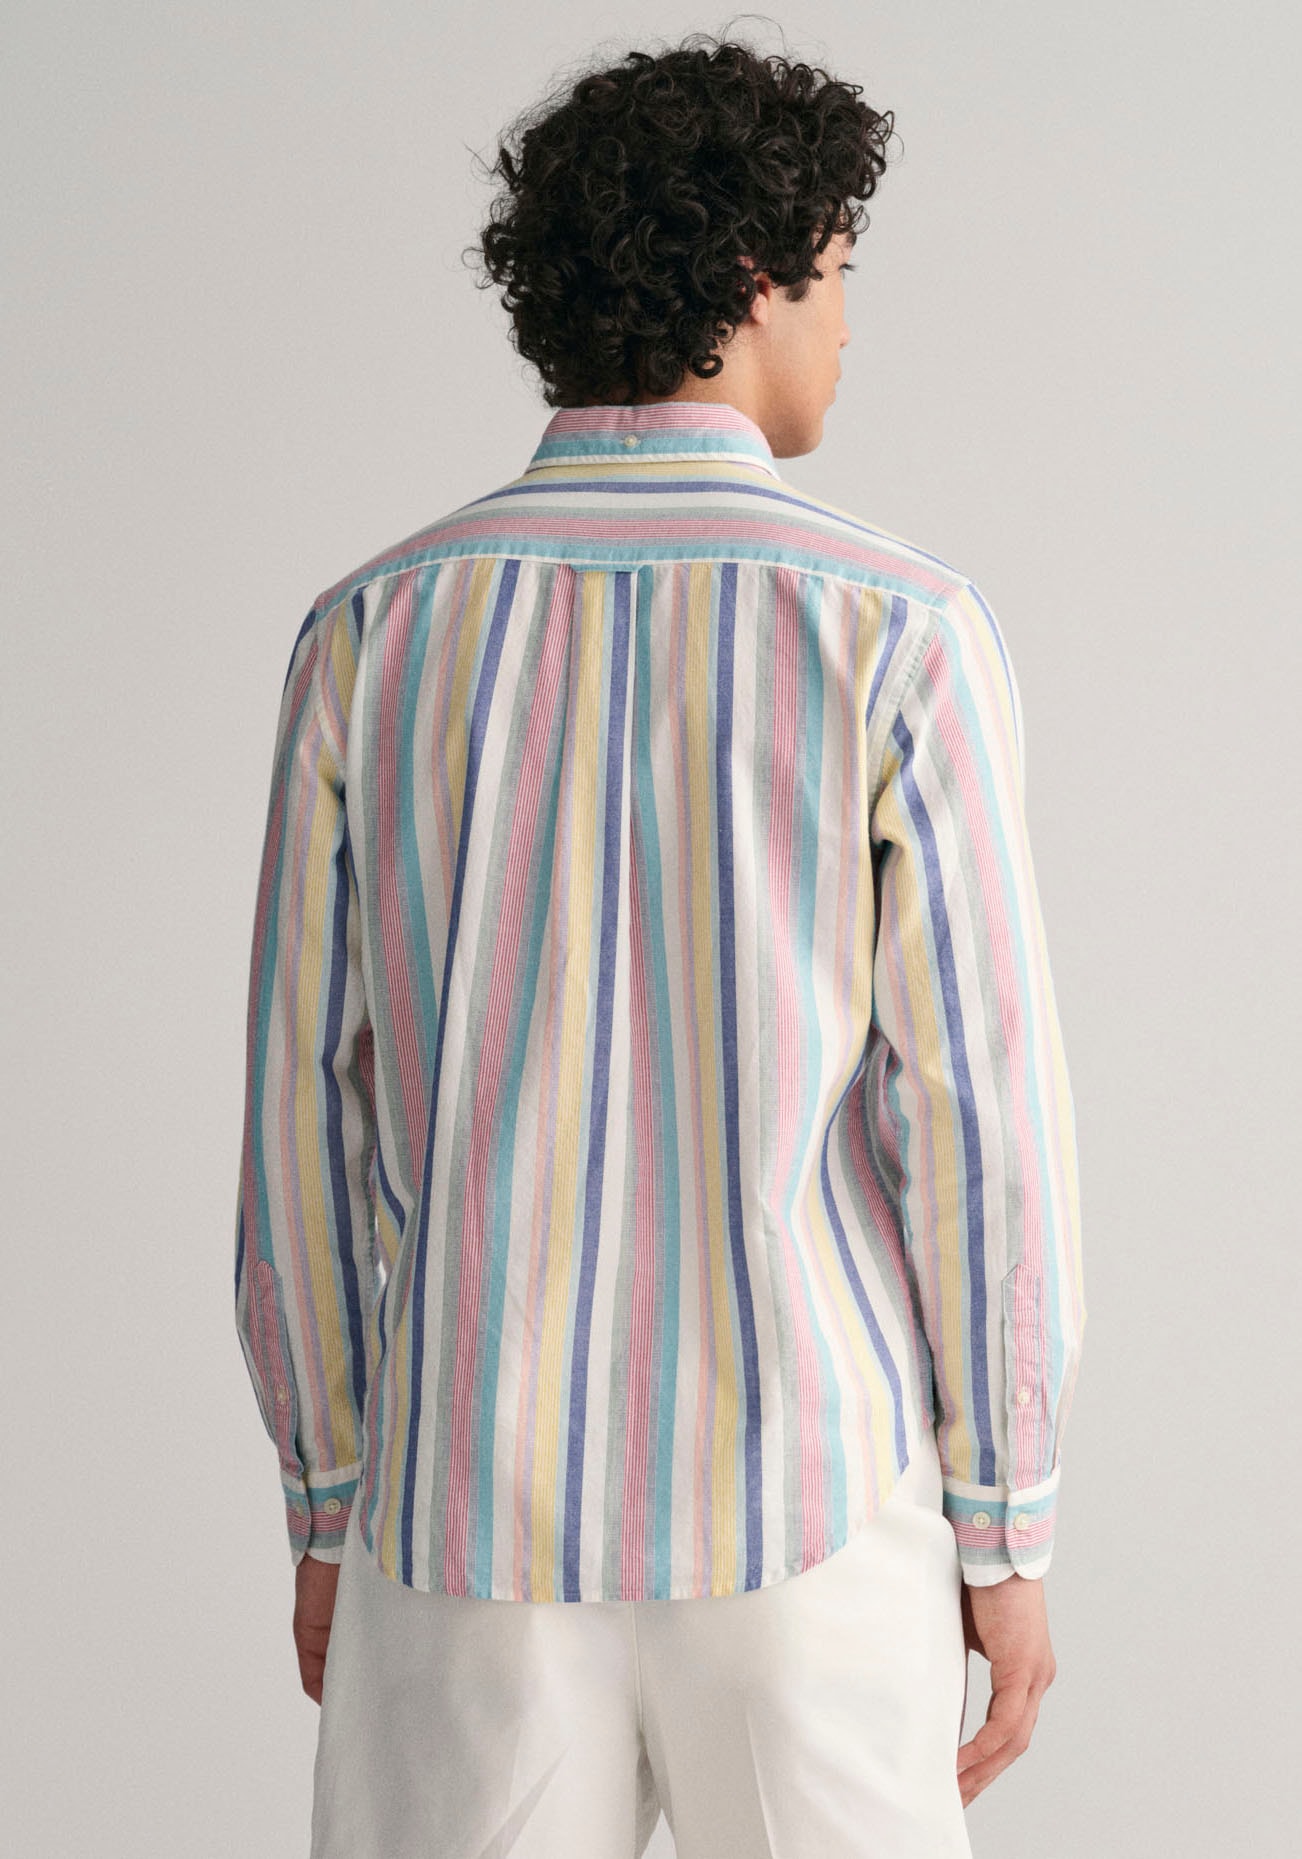 Gant Streifenhemd »Regular Fit Oxford Hemd strukturiert langlebig dicker gestreift«, in angenehmen Pastellfarben